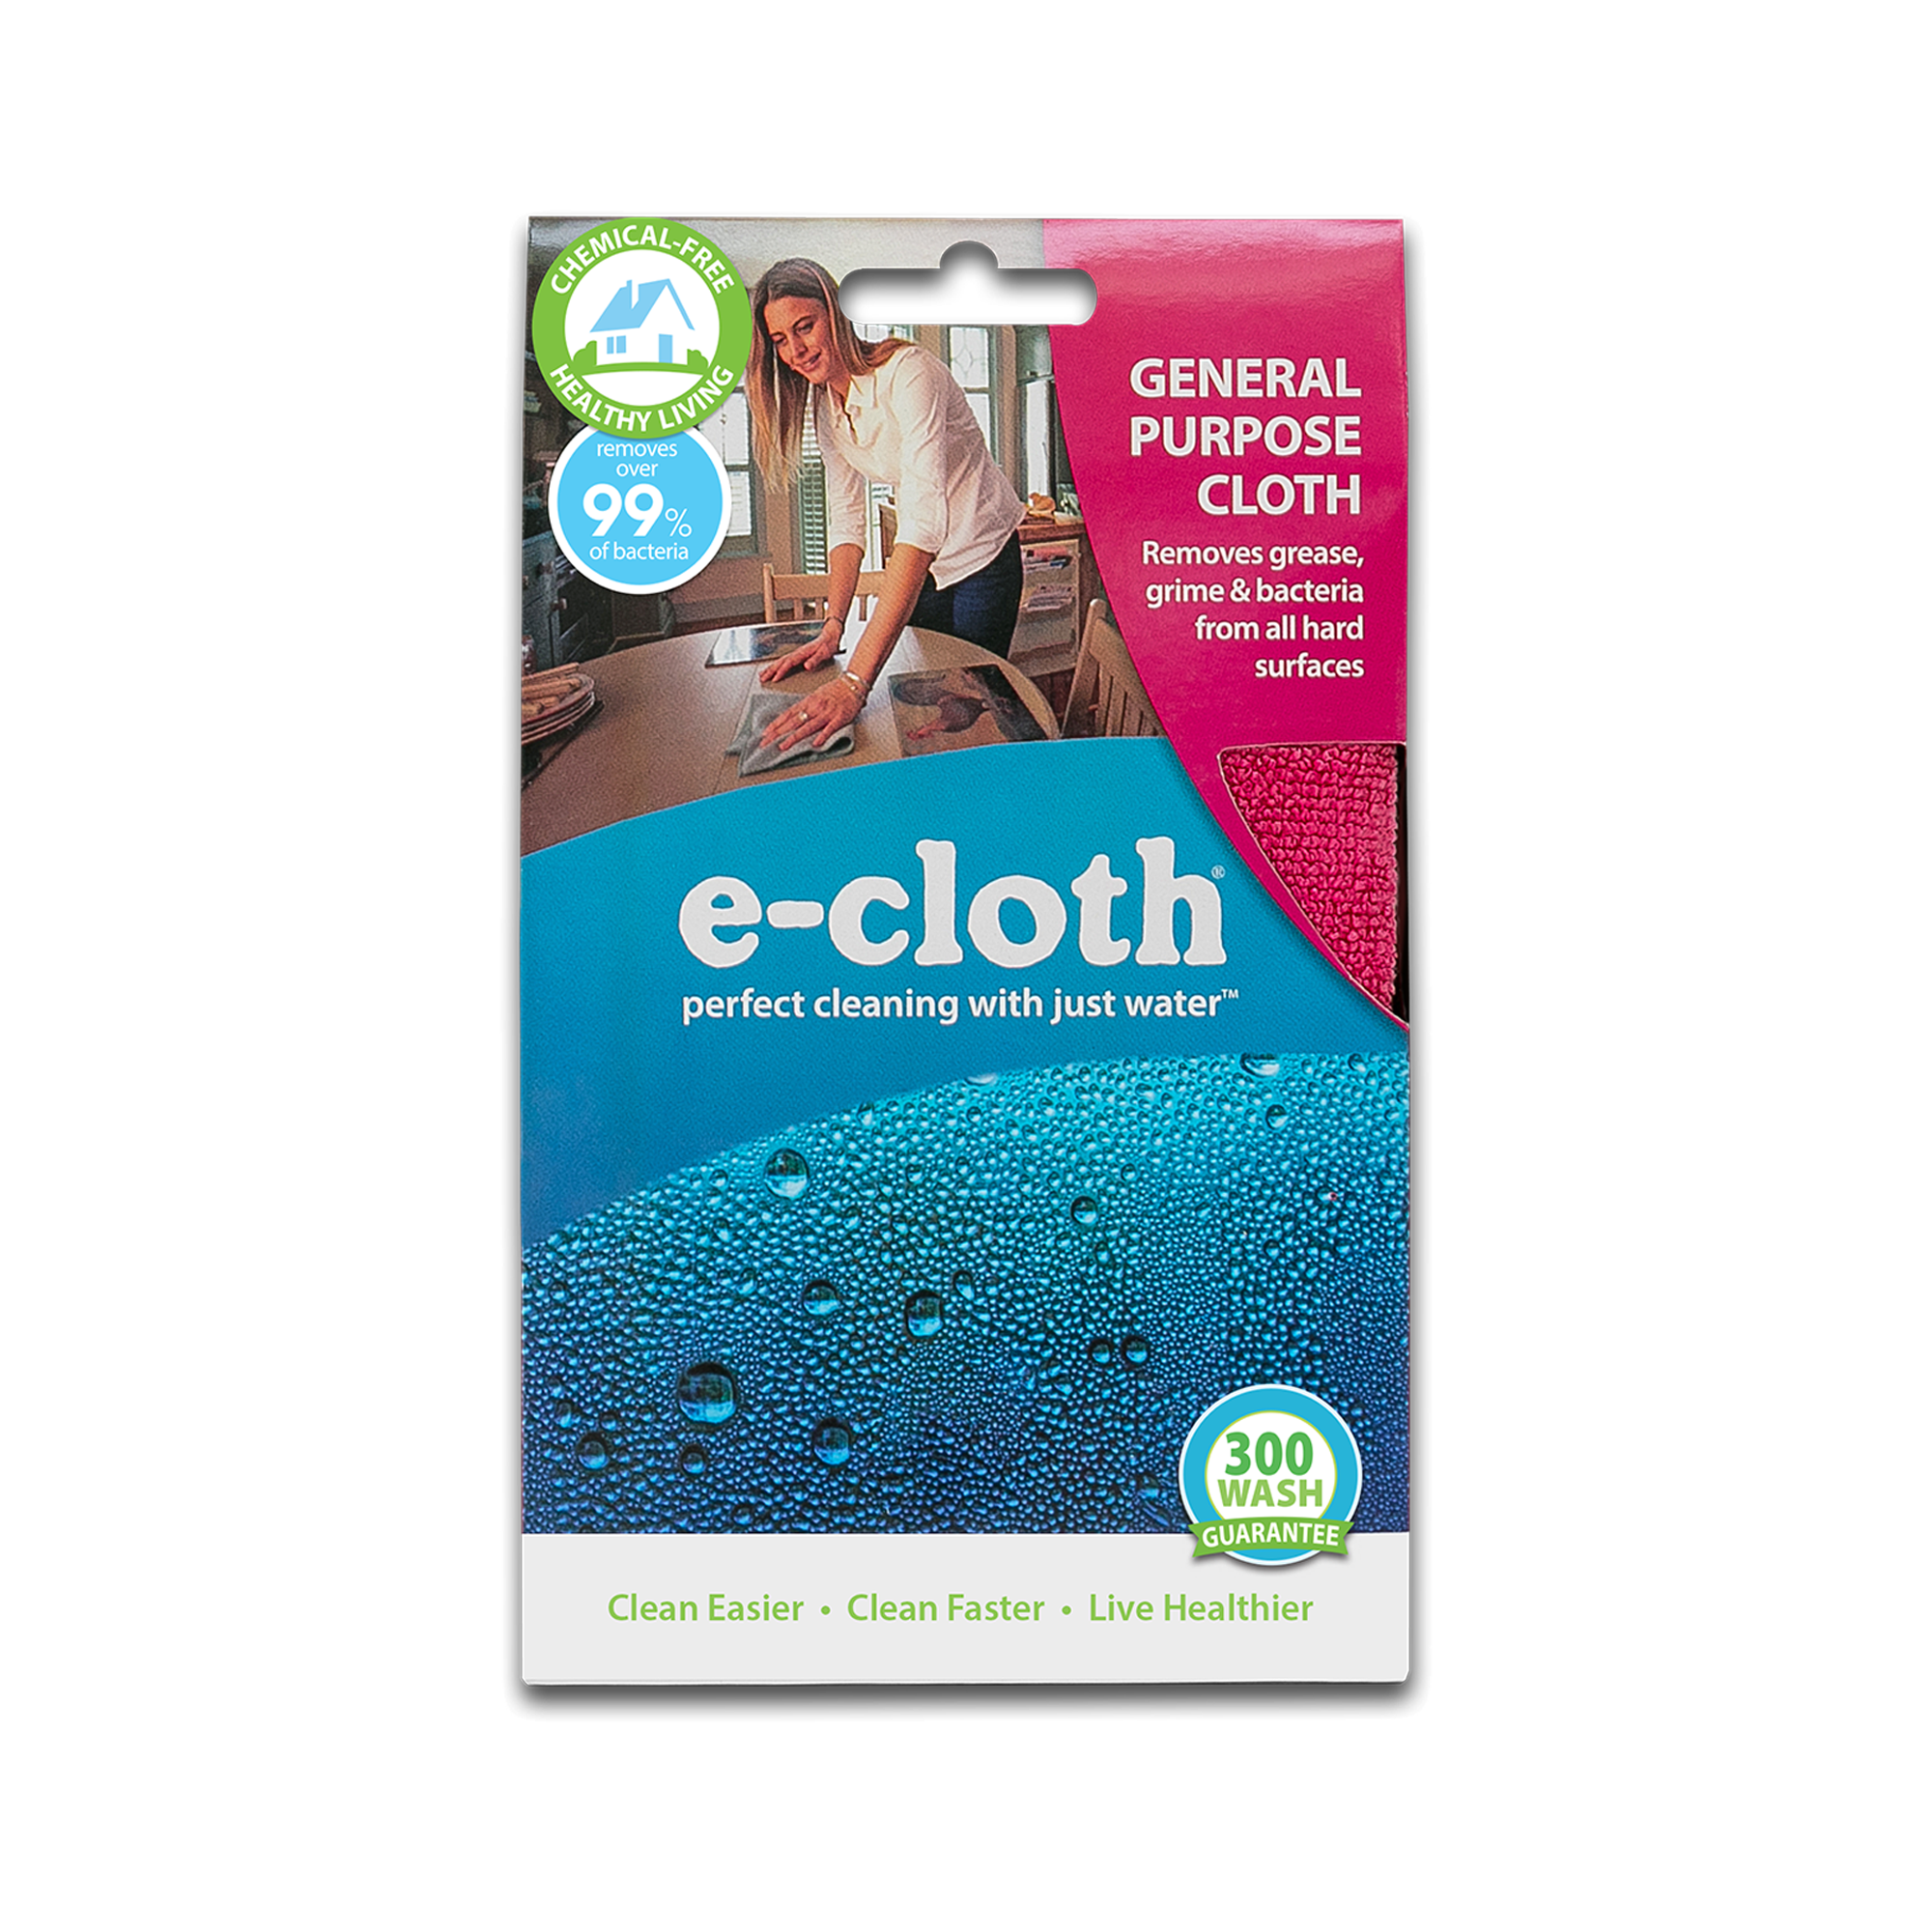 e-cloth General Purpose Cloth - PaperlessKitchen.com